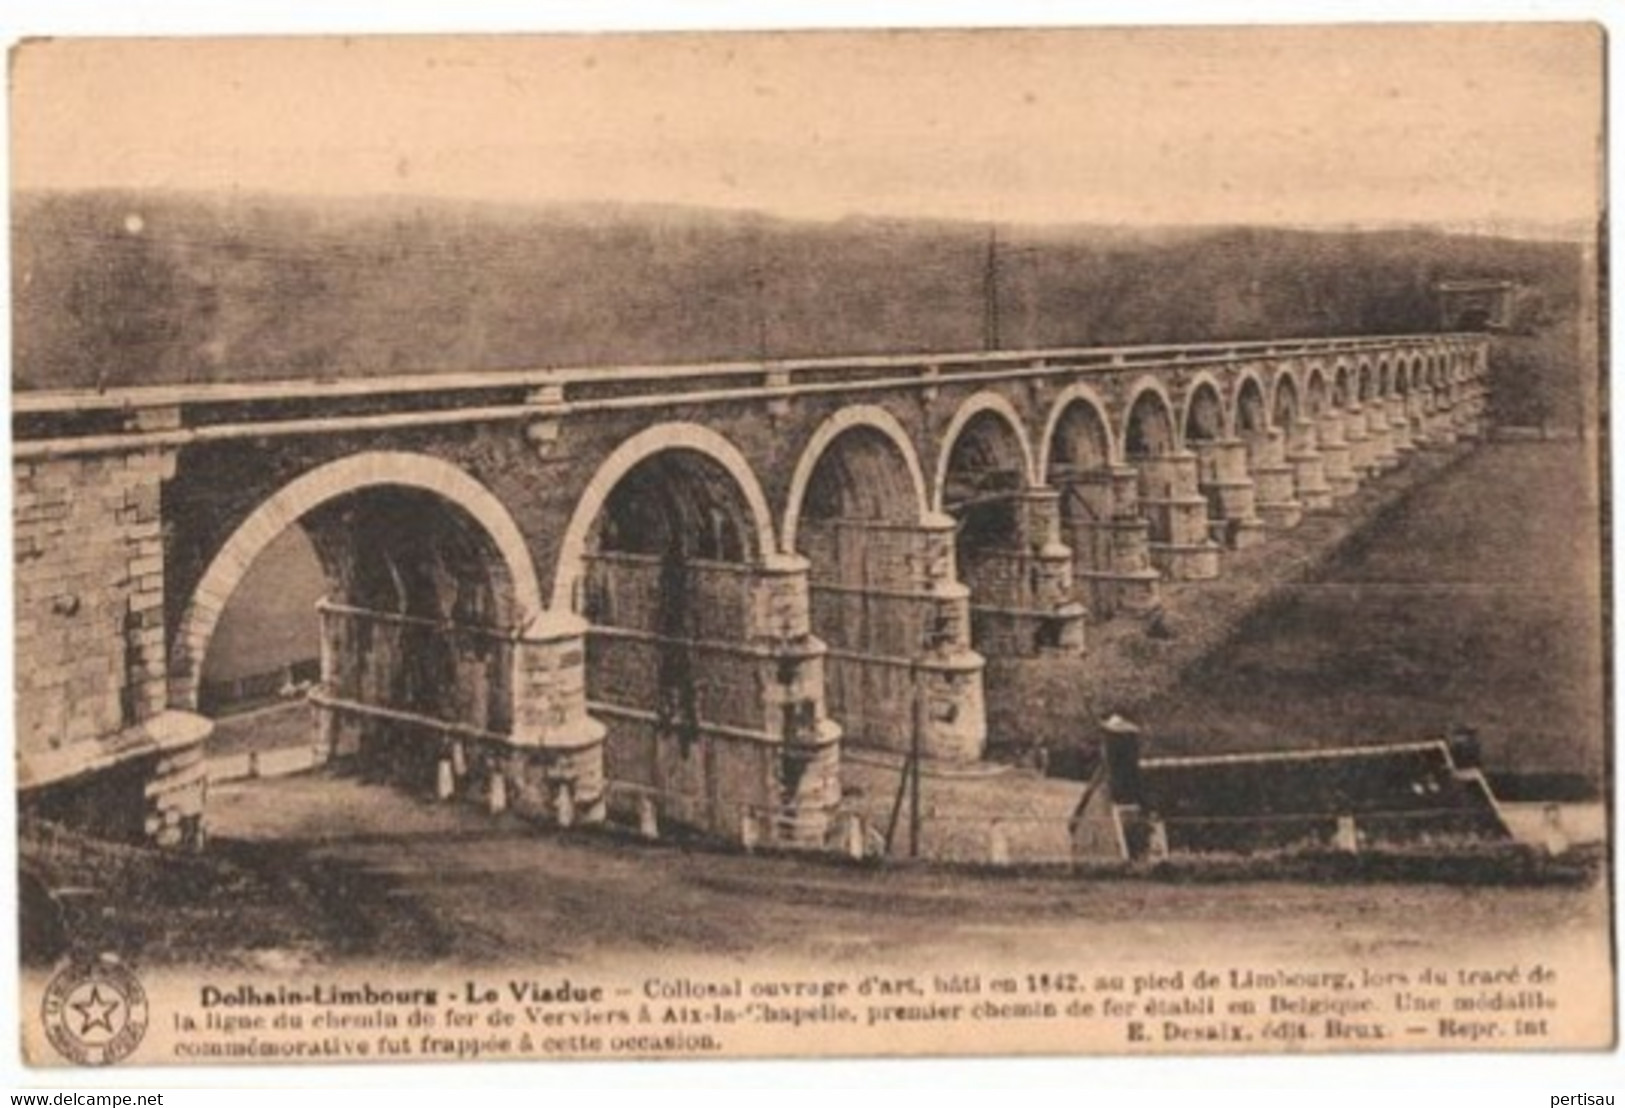 Dolhain-Limbourg Viaduct - Limbourg